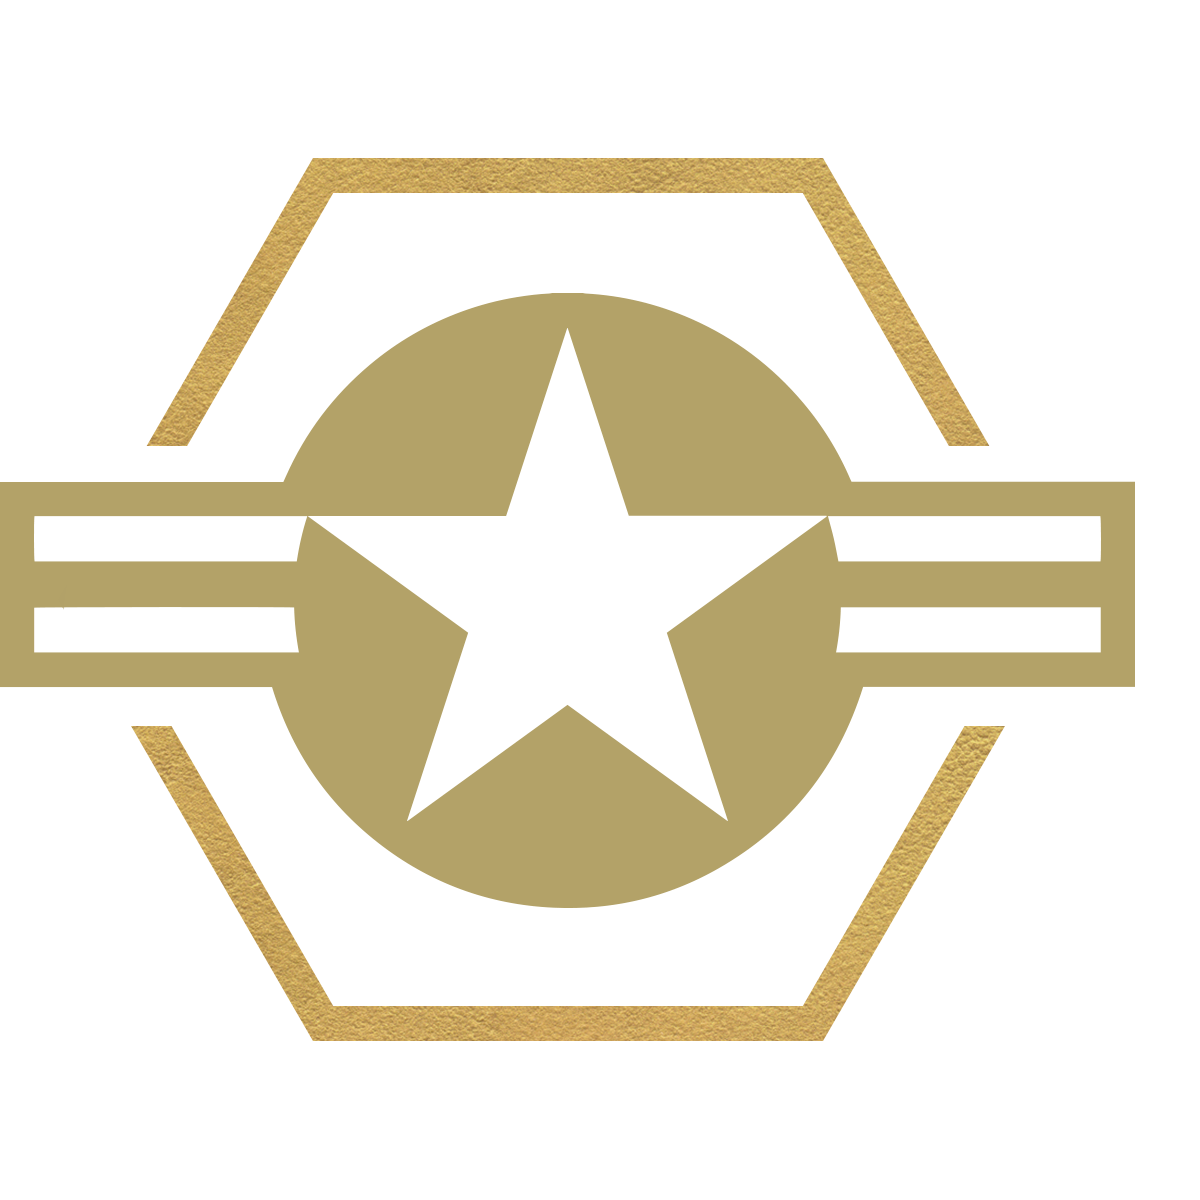 US Air force logo